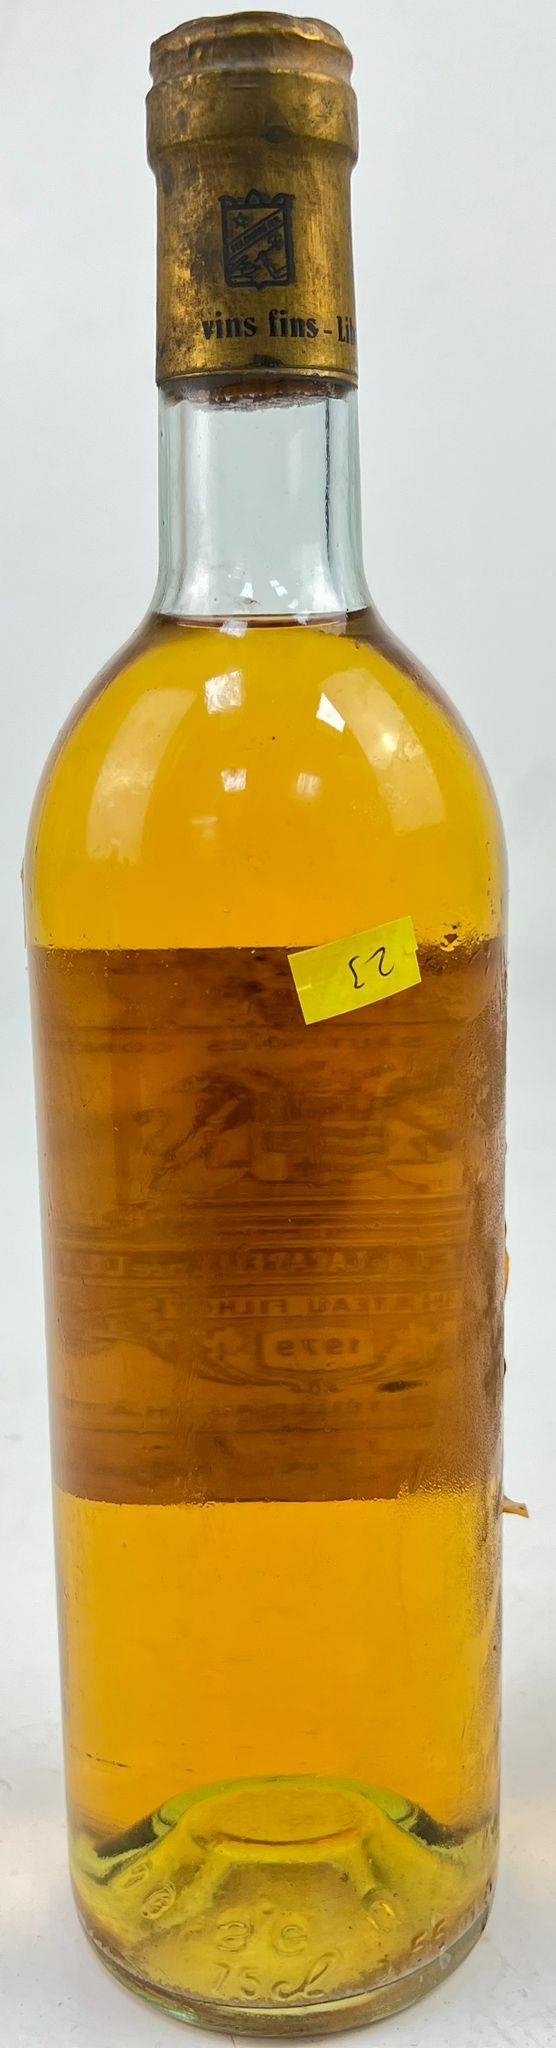 A Bottle of 1979 Sauternes - Chateau Filhot. - Image 2 of 4